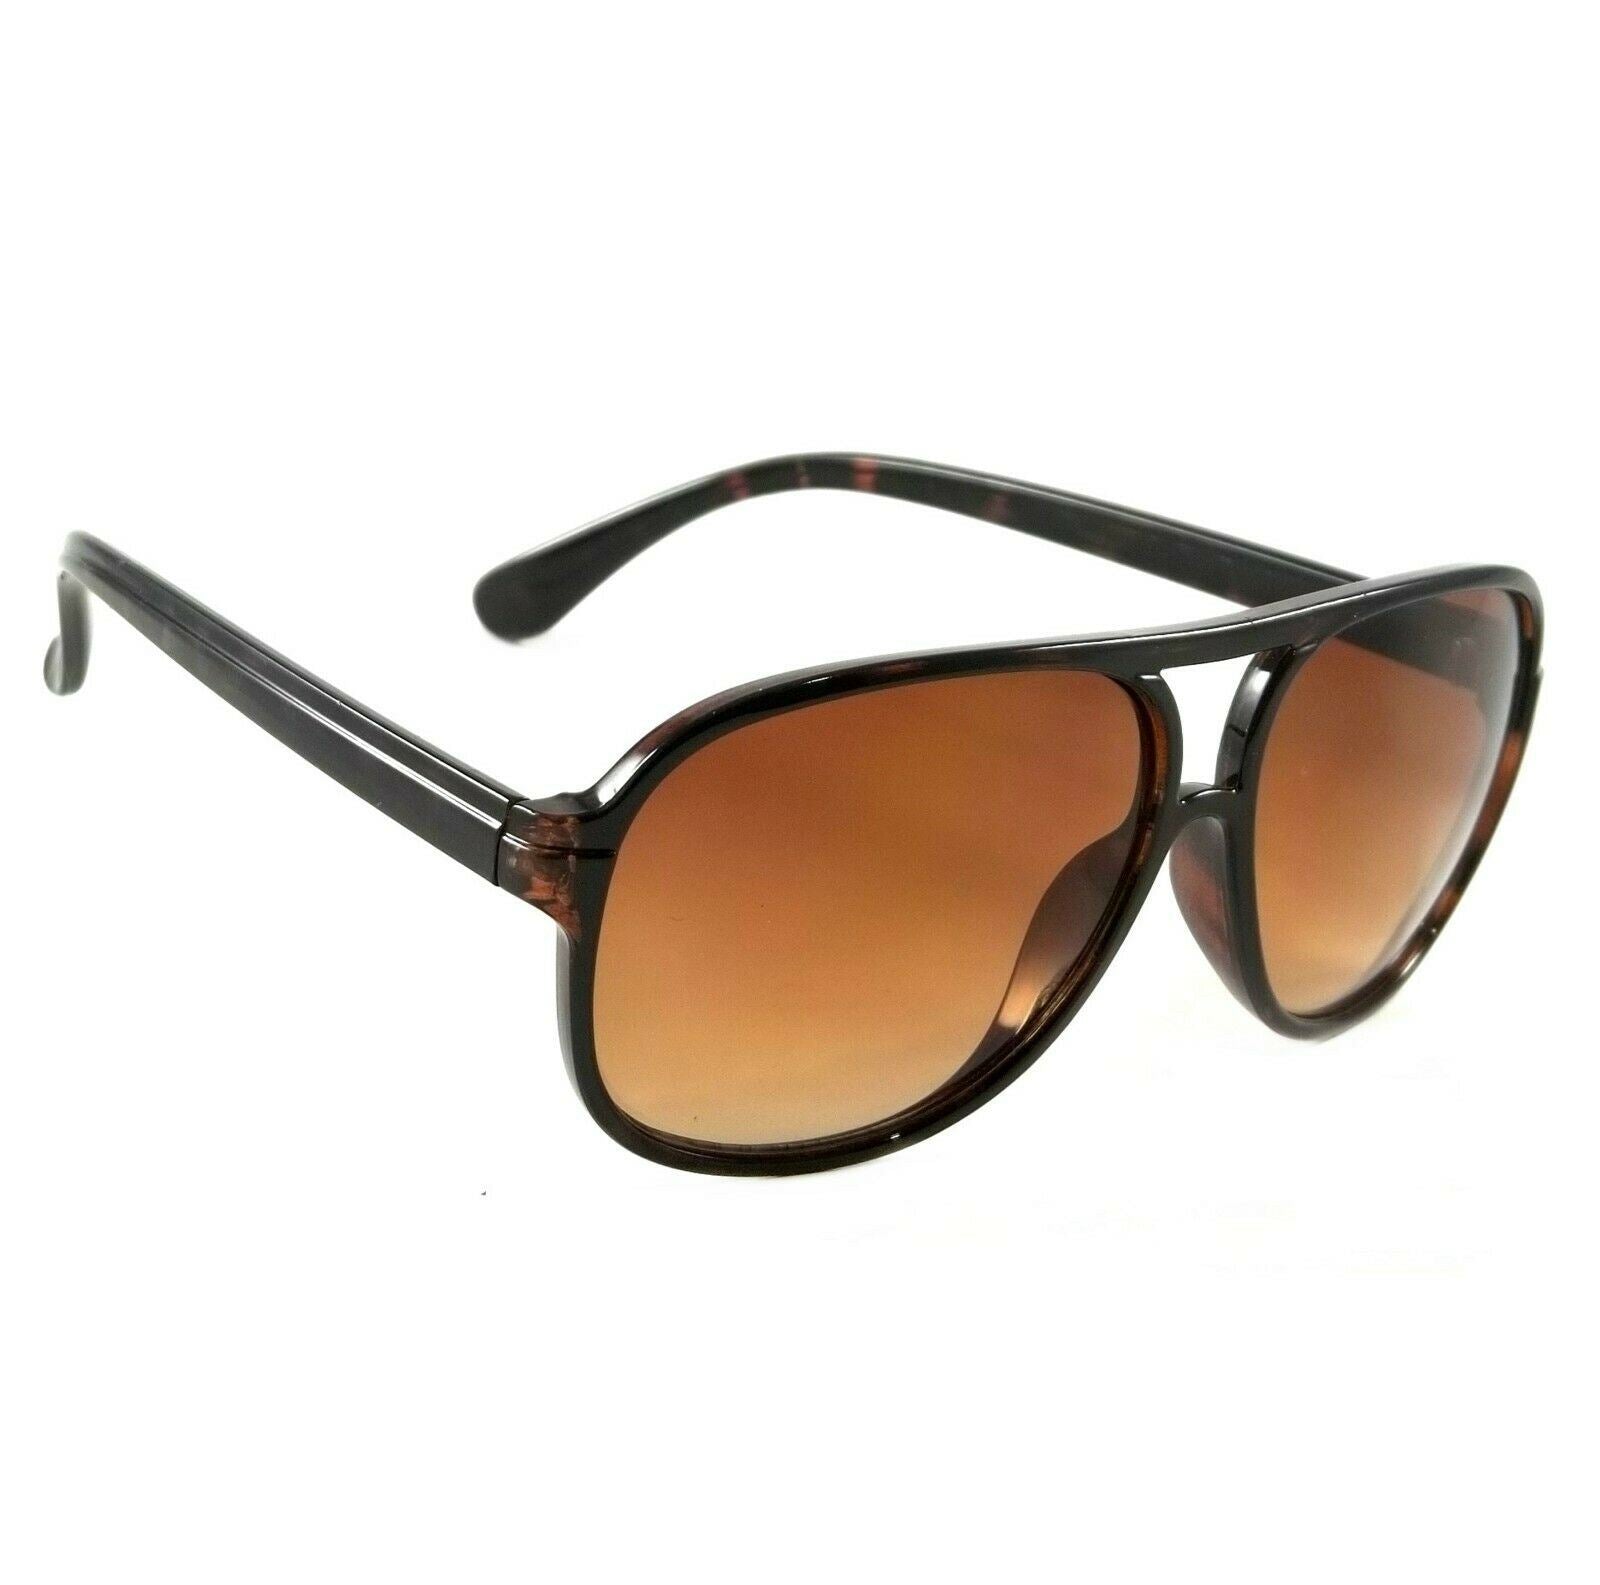 Shop Zest Smoke Vintage Aviator Sunglasses for Women